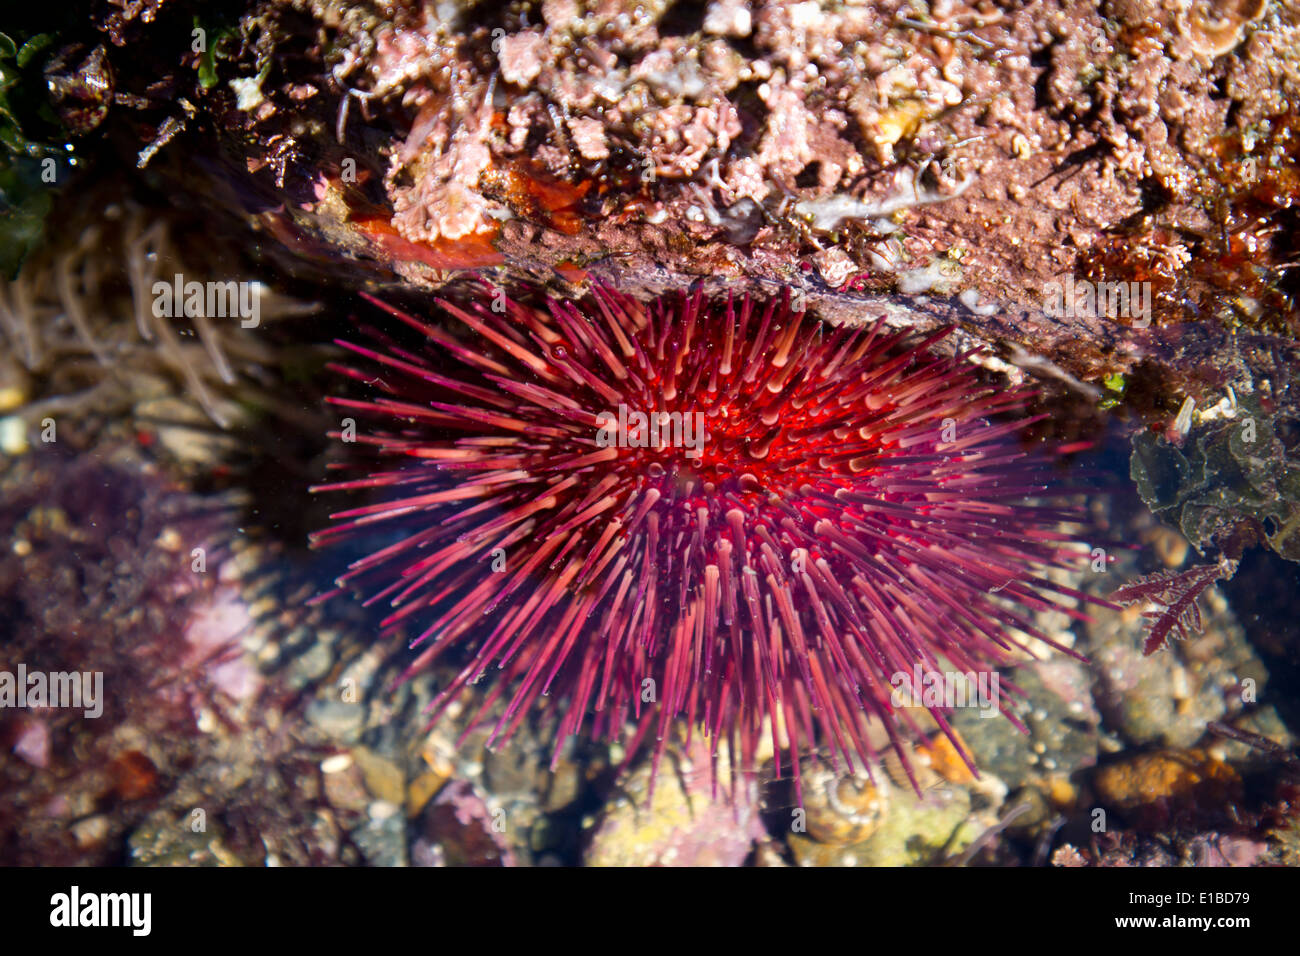 Purple sea urchin (Paracentrotus lividus) in a tidal pool. Stock Photo